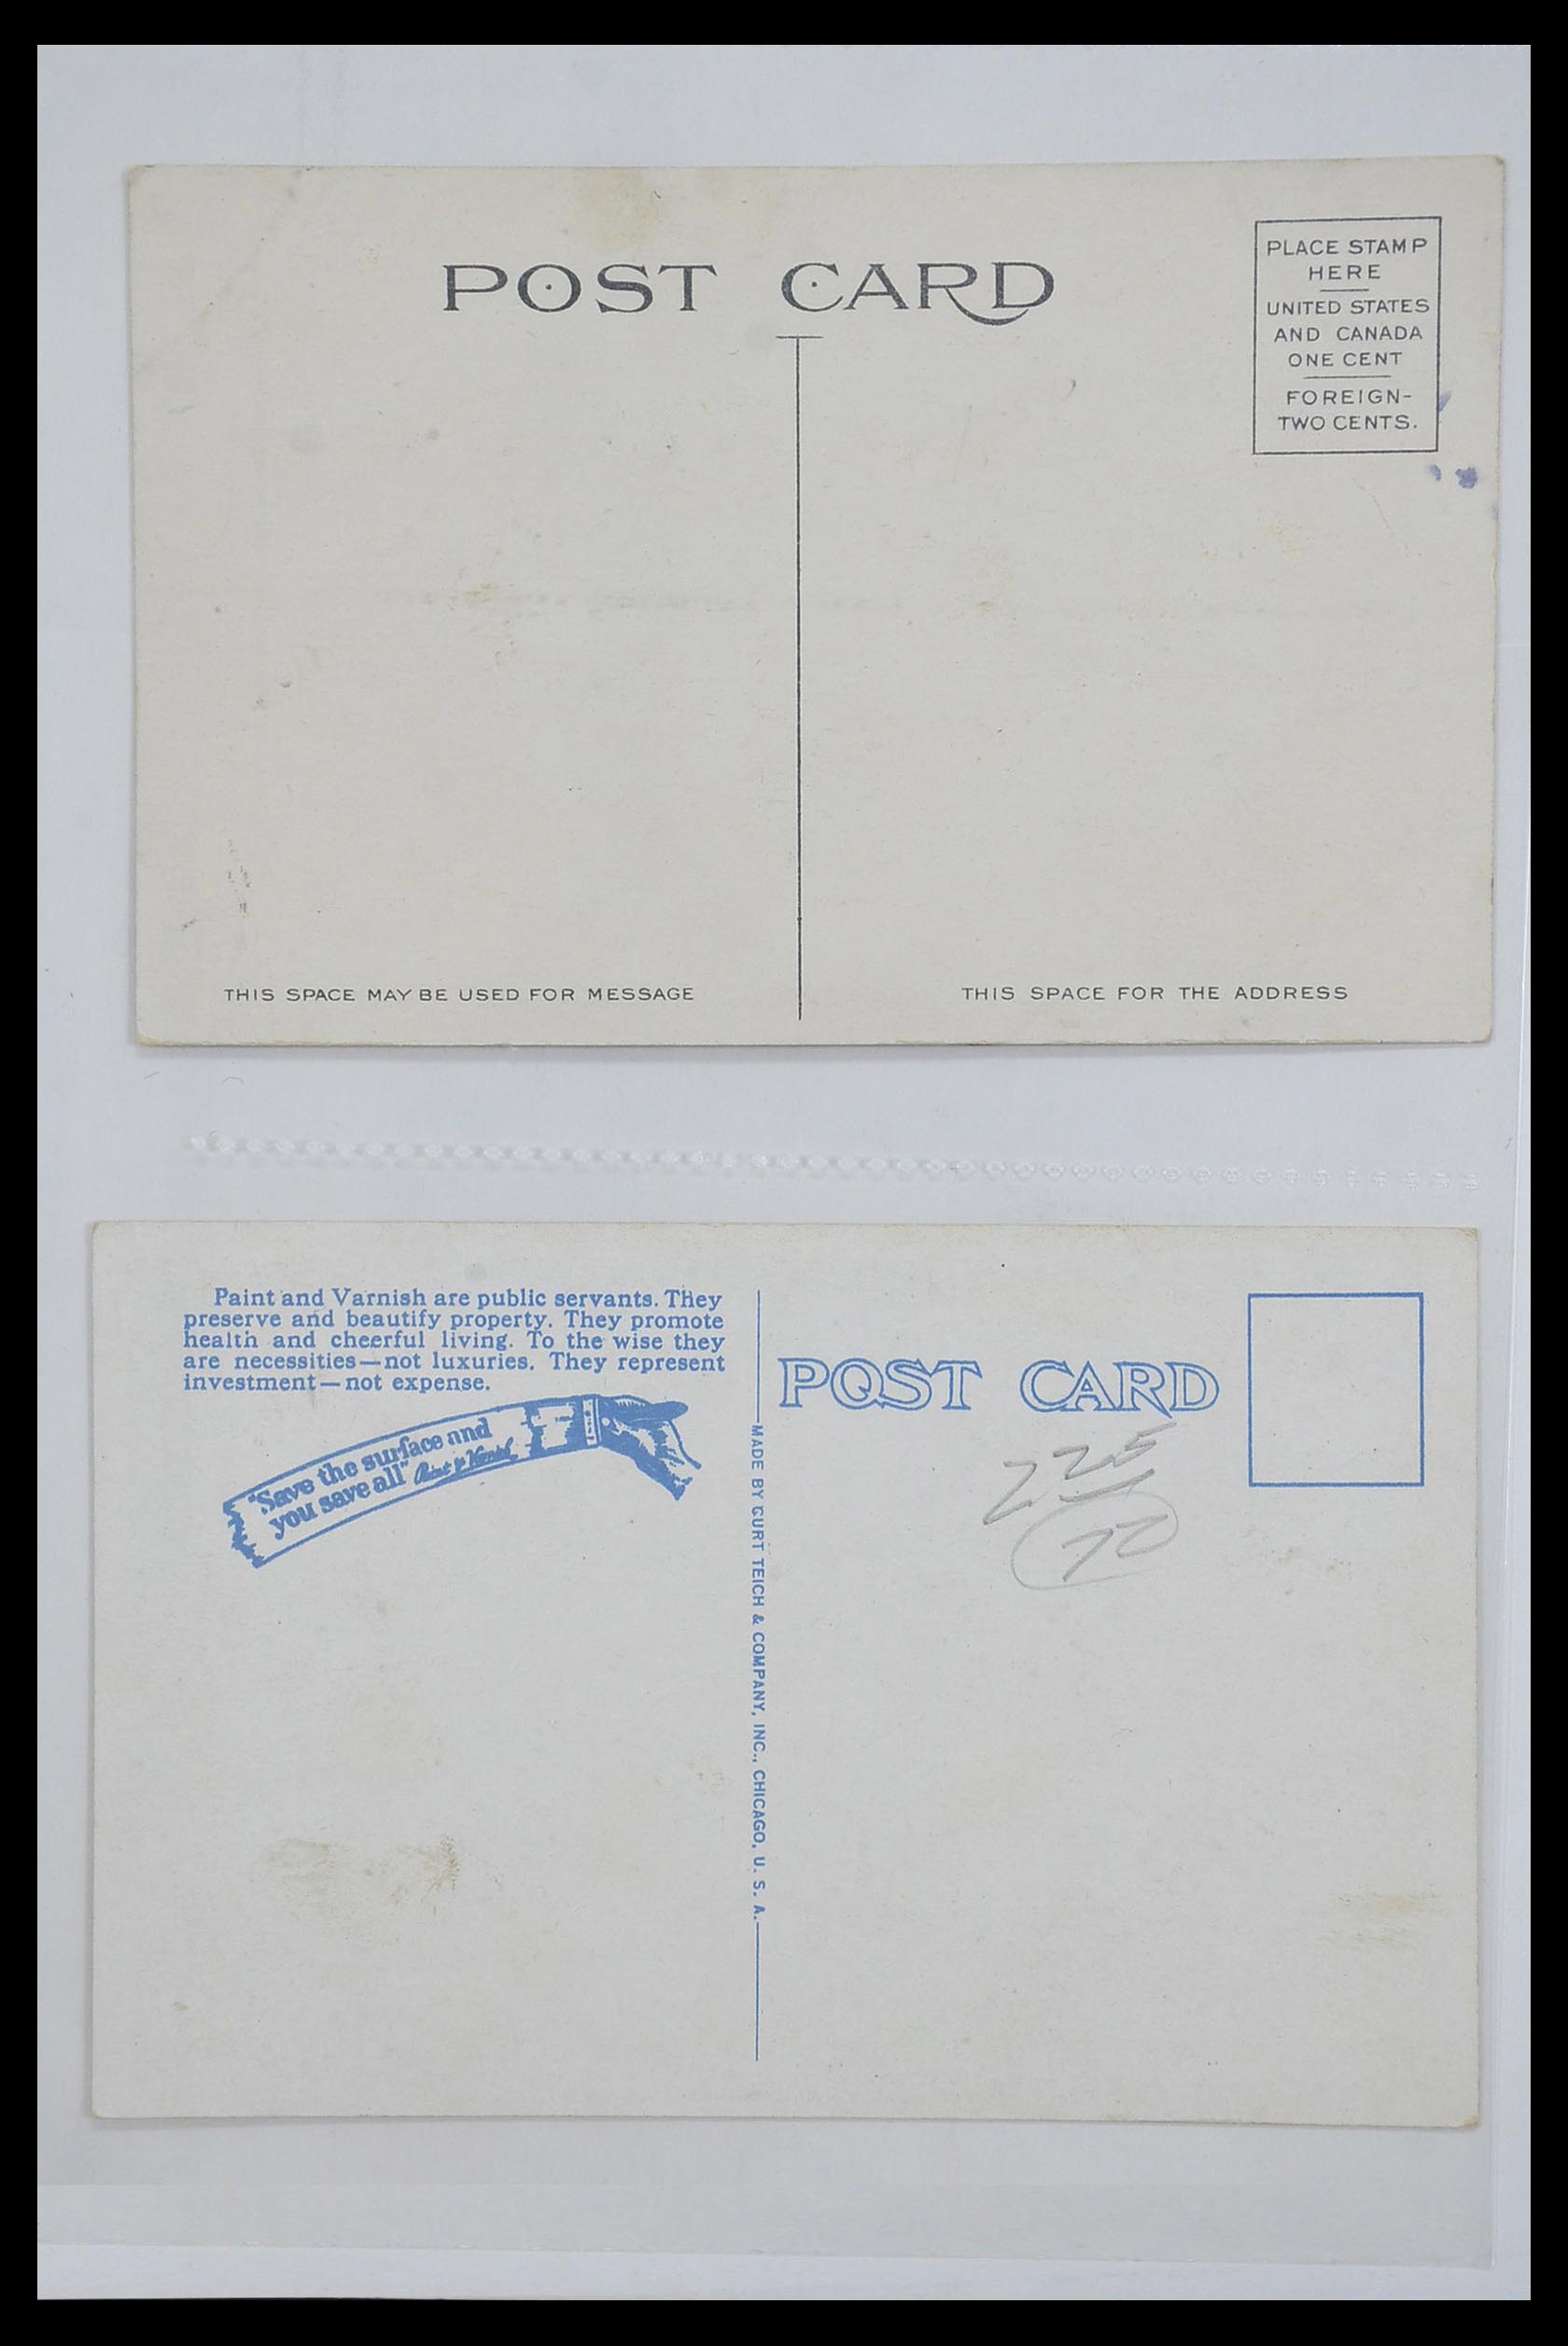 33501 093 - Stamp collection 33501 USA postal cards 1880-1920.